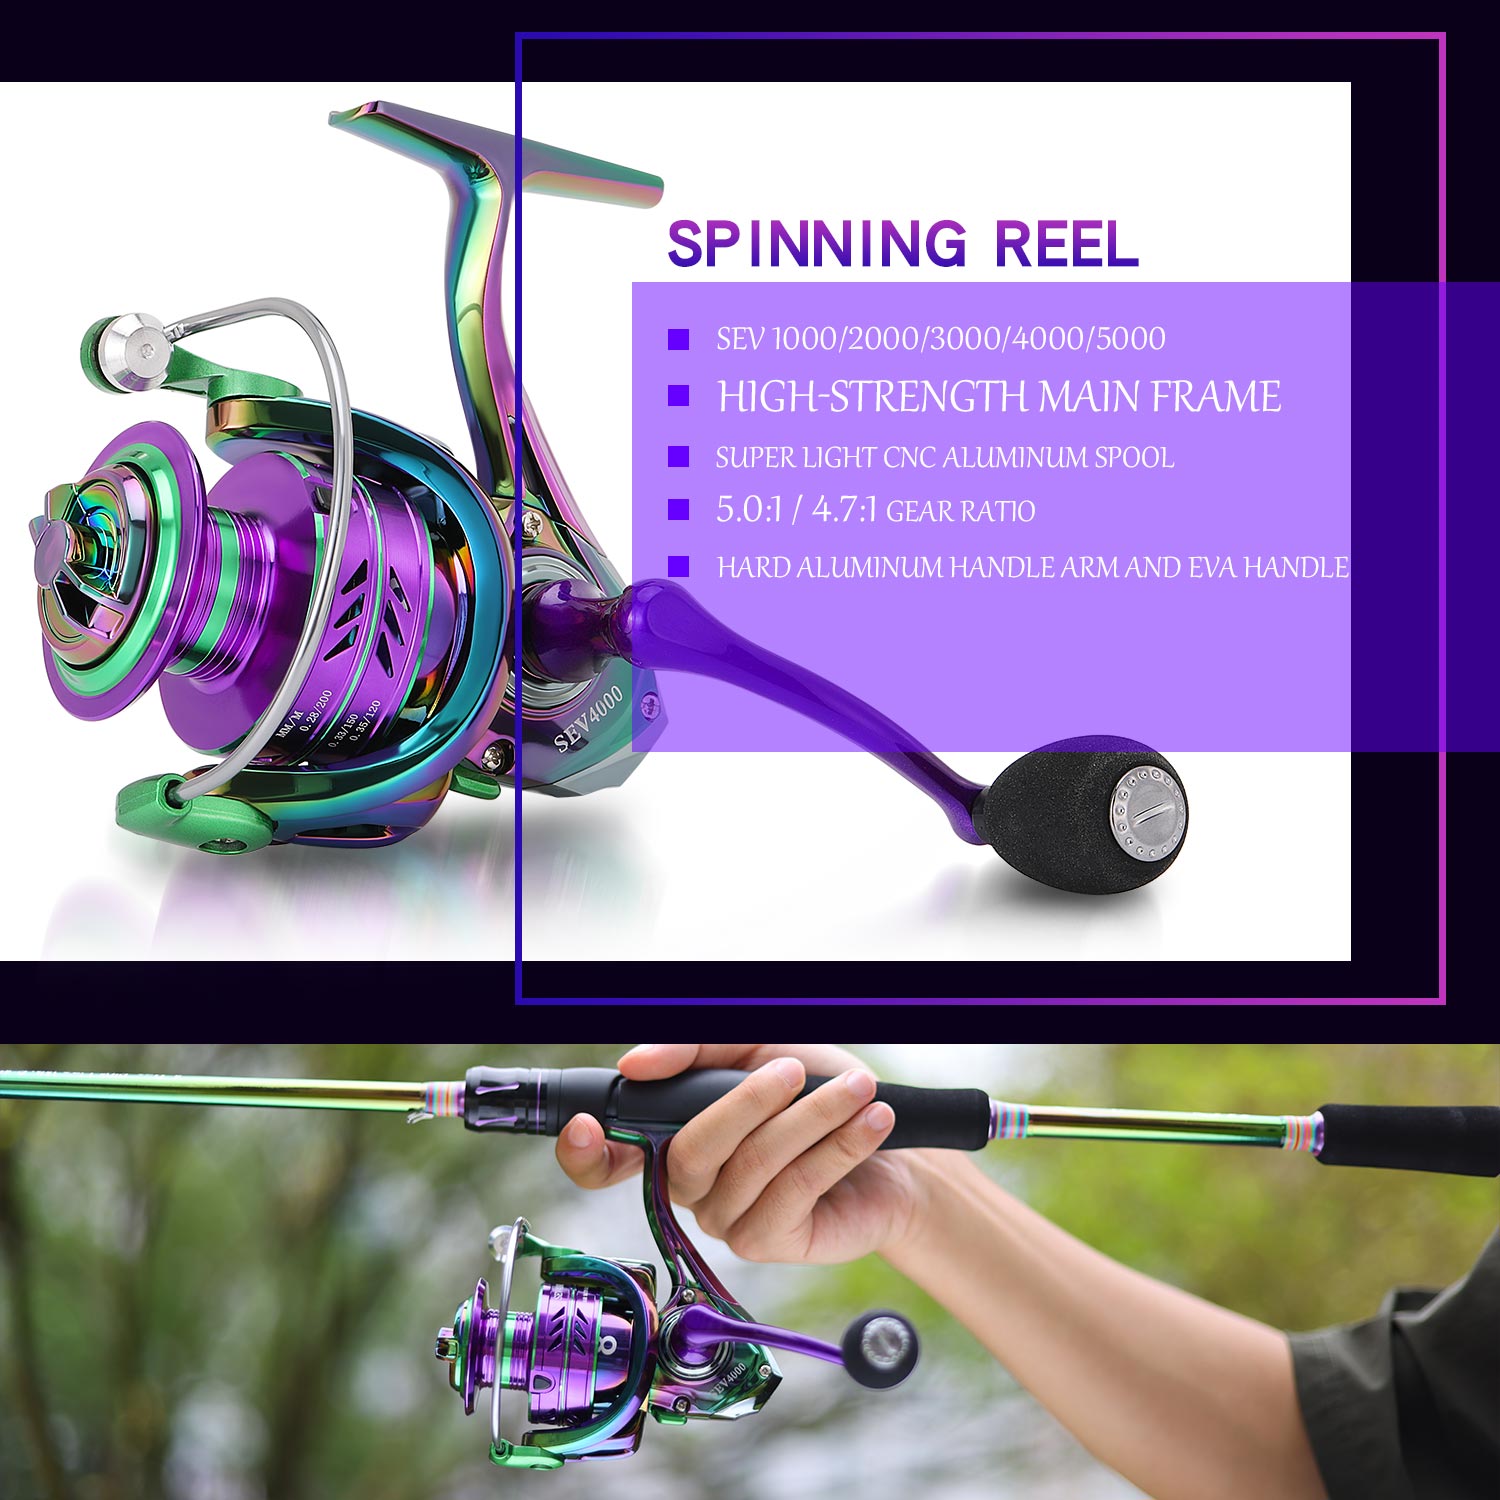 Sougayilang New Colorful 13+1BB Fishing Reel Lightweight CNC Aluminum Spool  5.2:1 Gear Ratio Spinning Reel Carp Fishing Coil